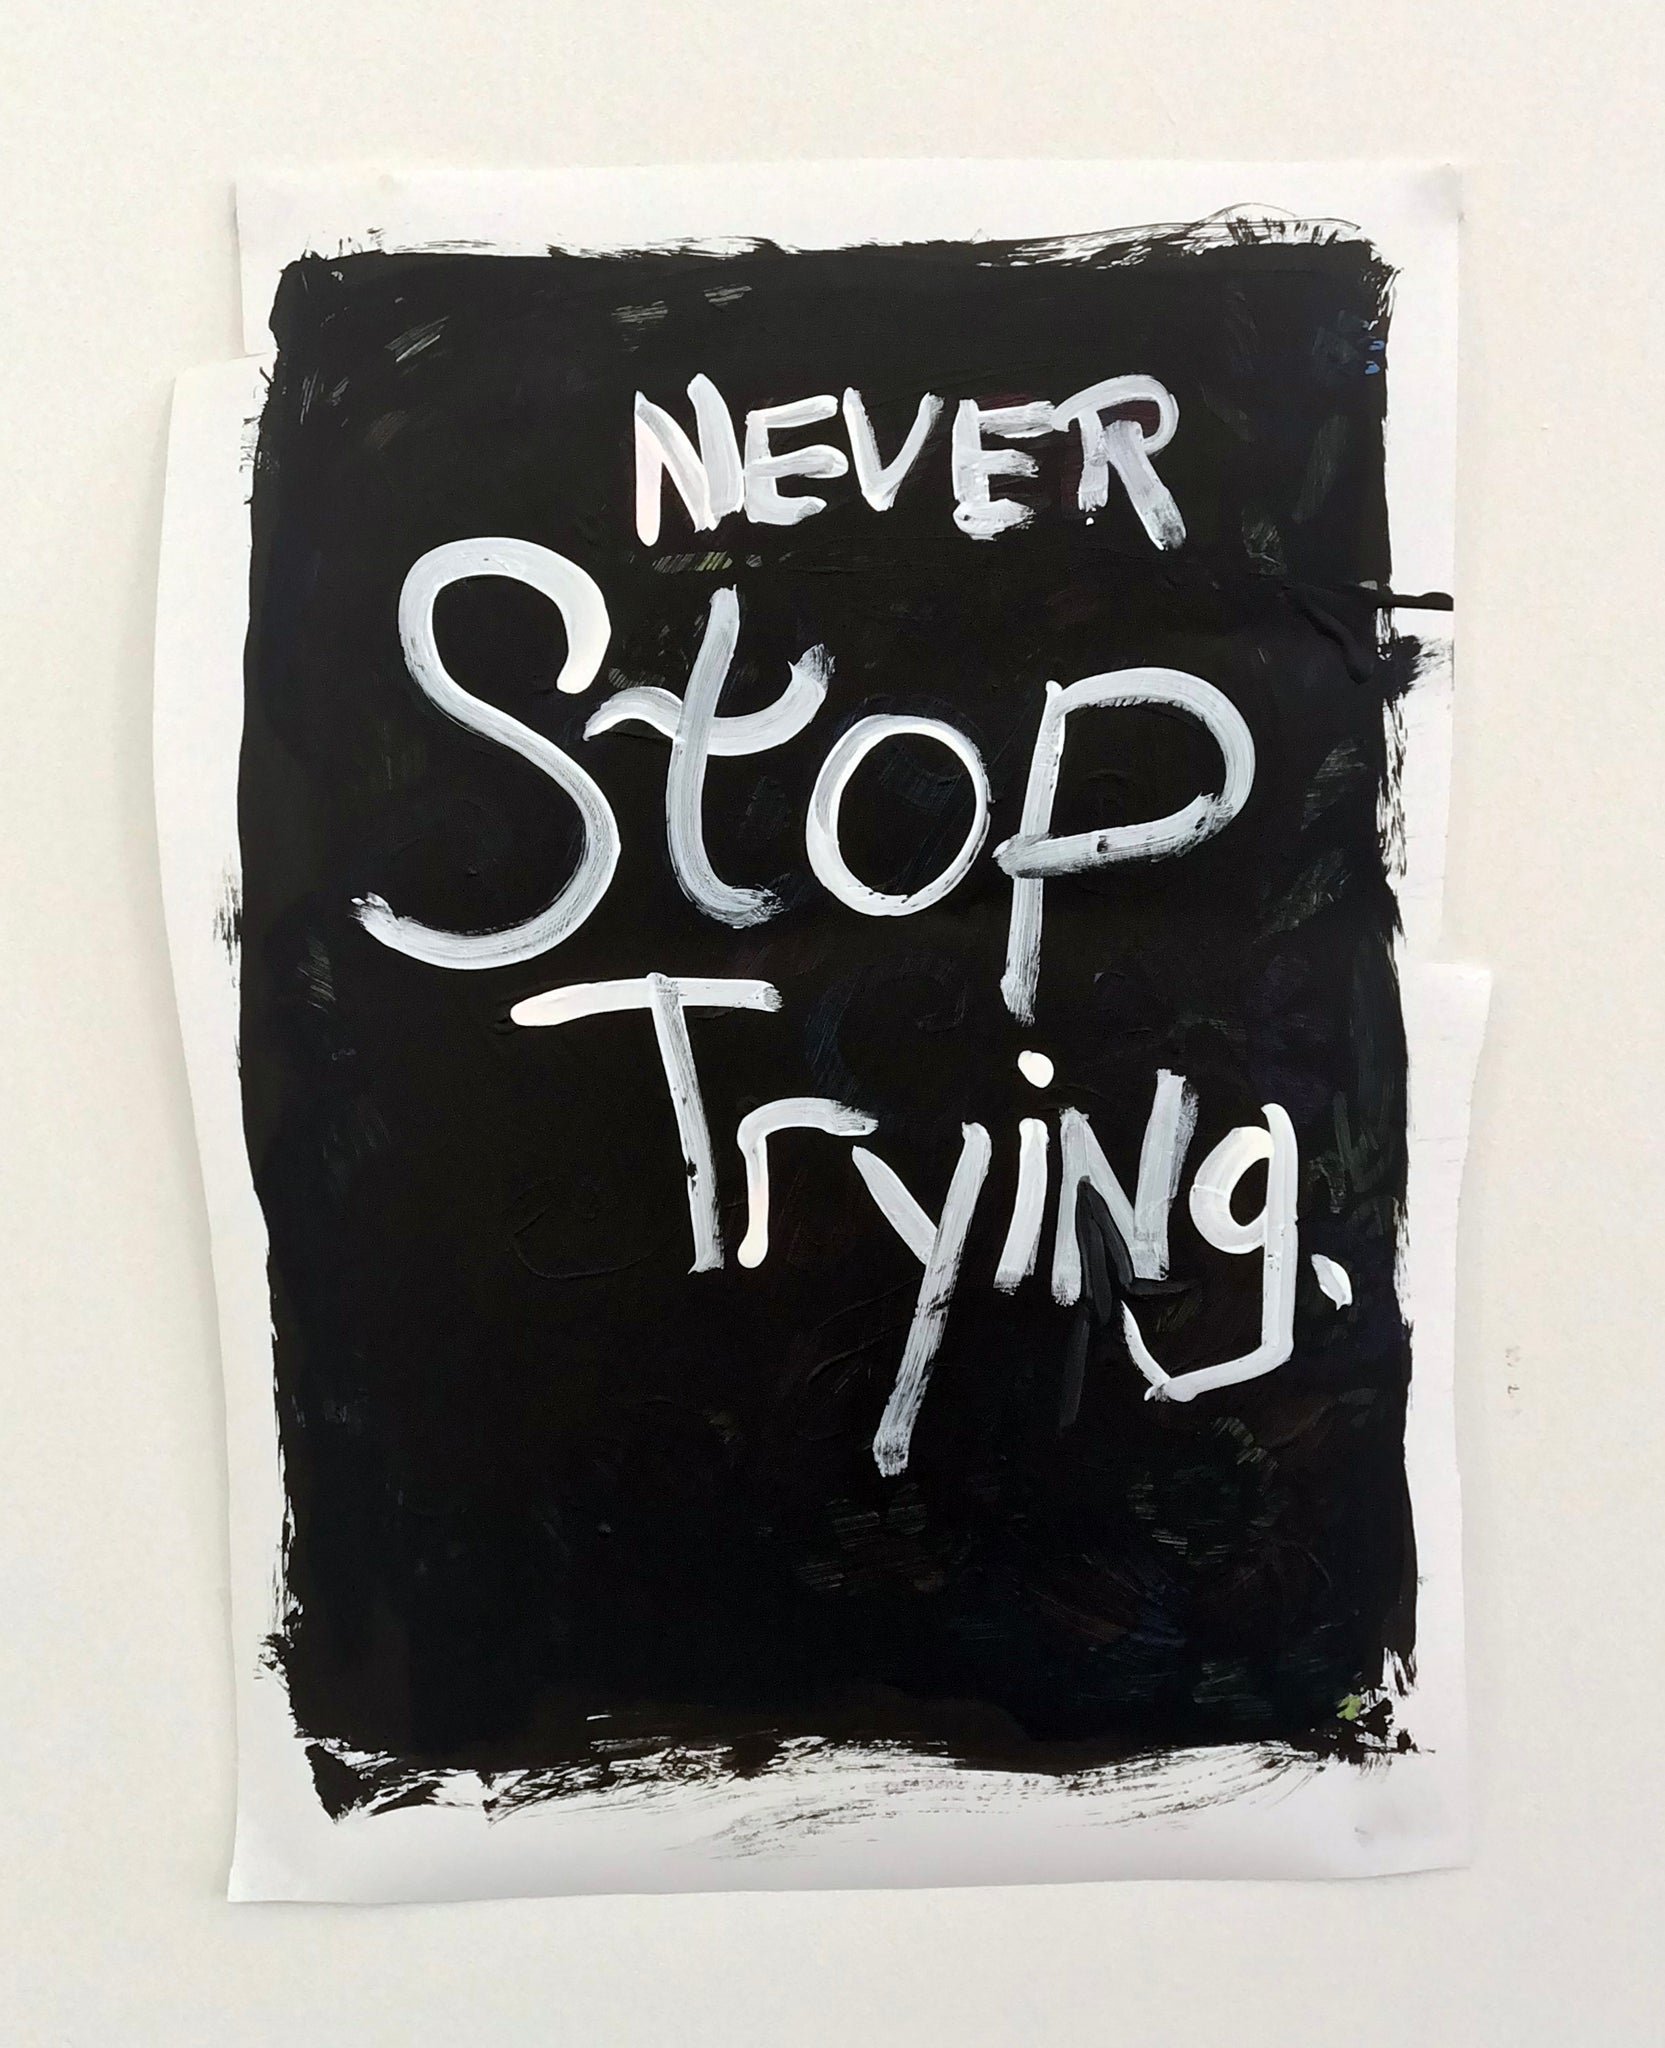 Alison Woods, "Never Stop"